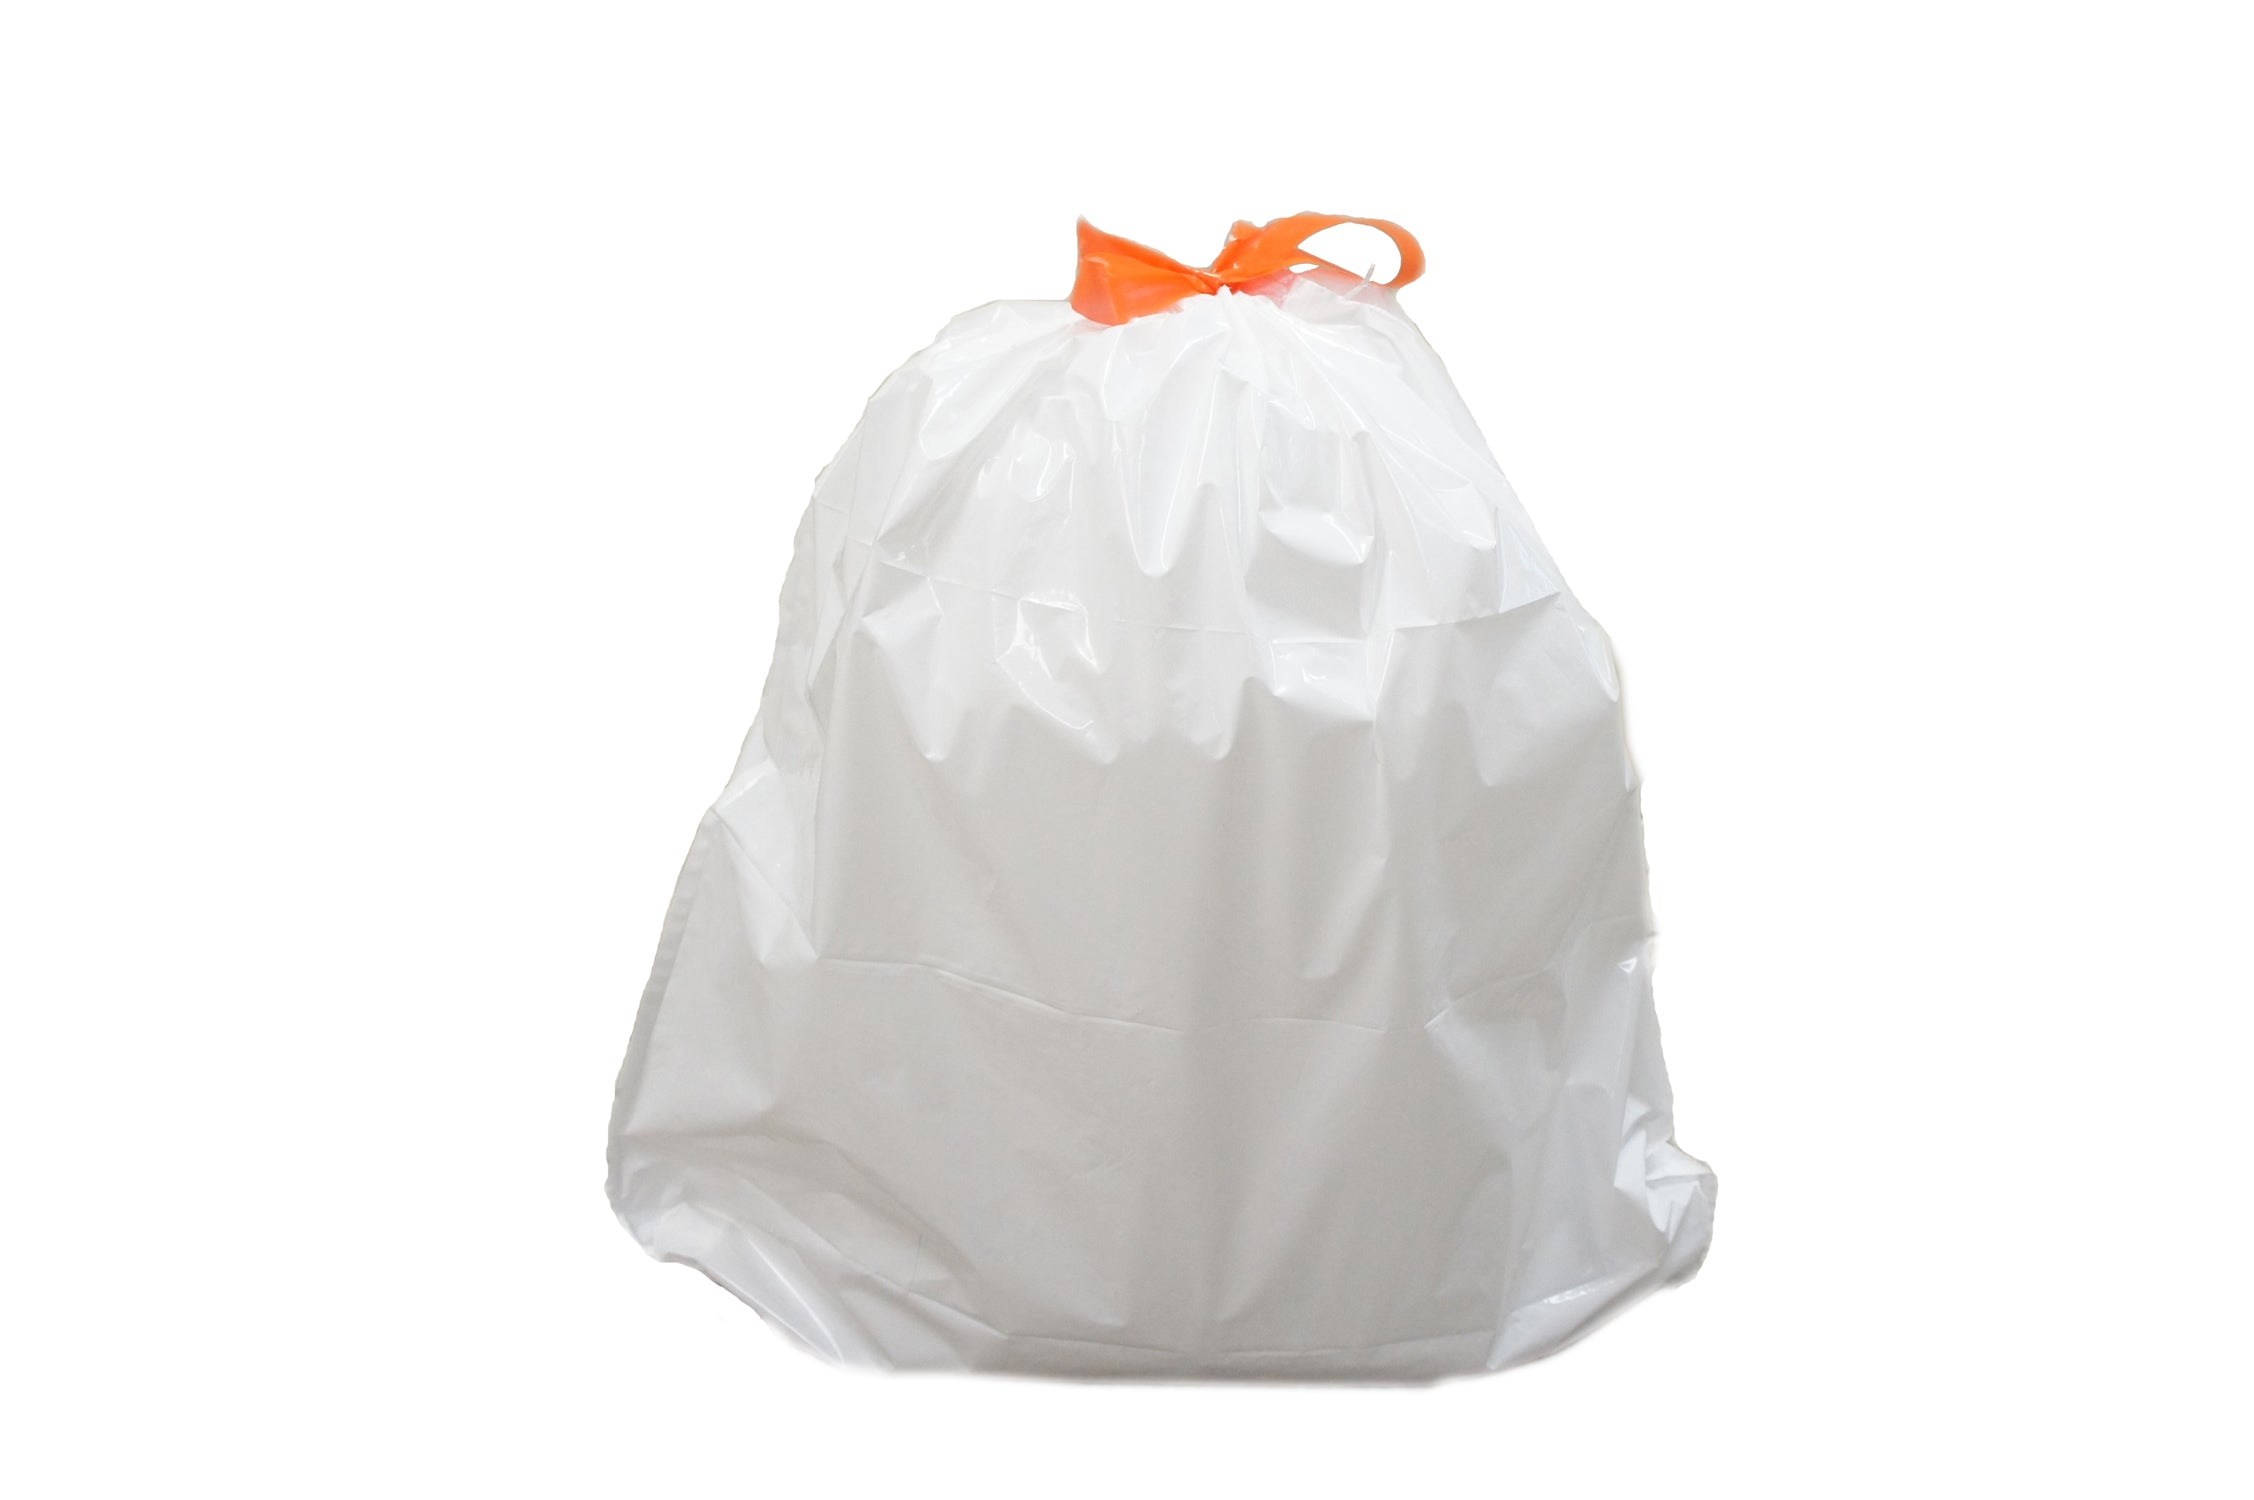  Plasticplace 8 Gallon Trash Bags â”‚ 0.7 Mil â”‚ White